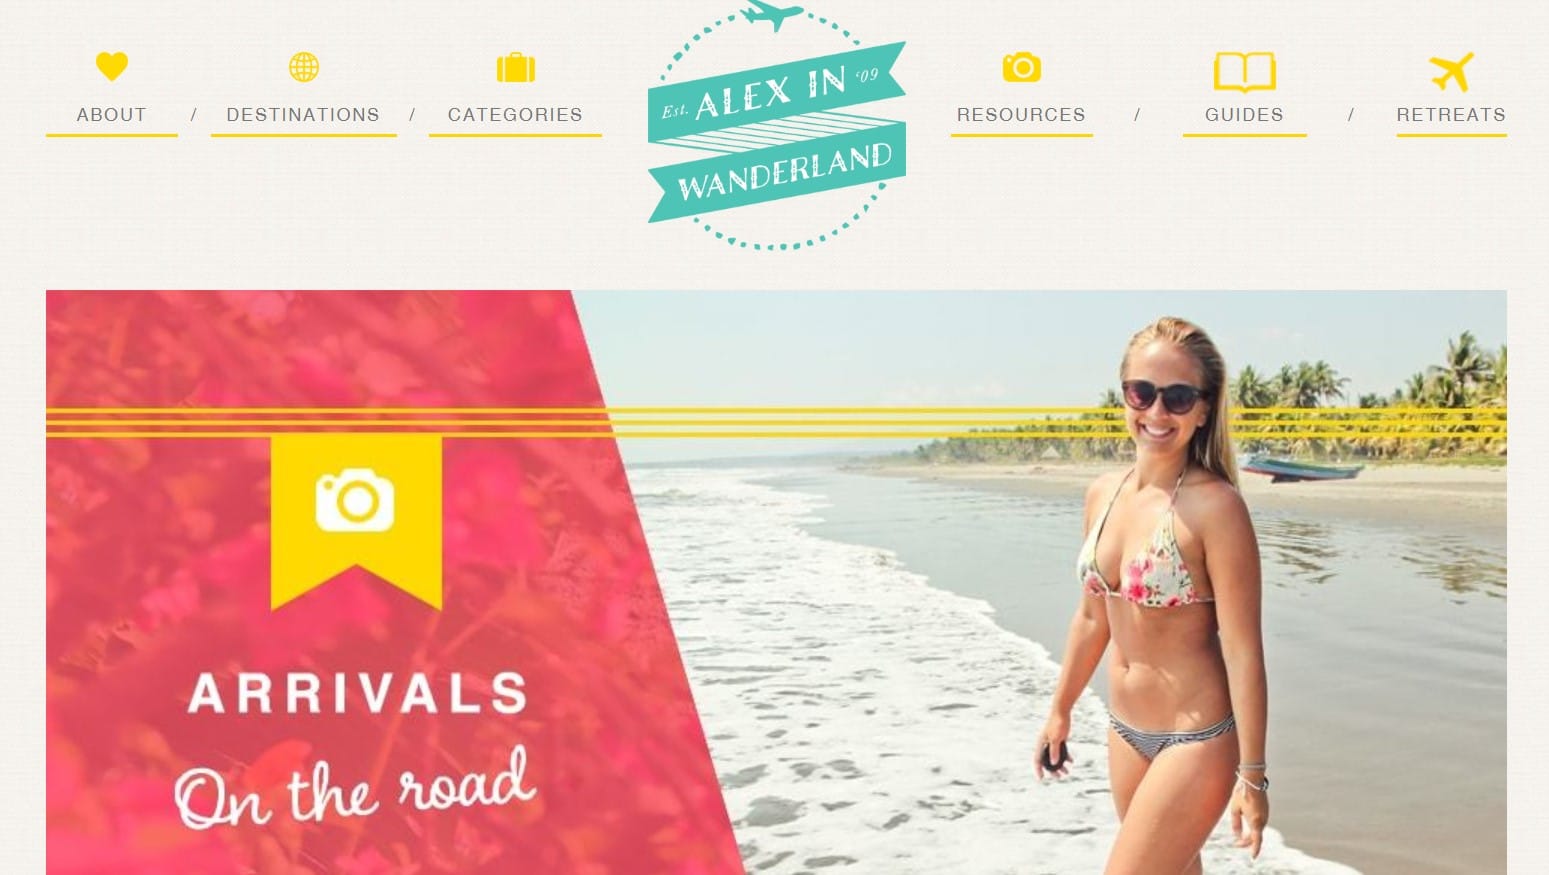 Travel blog name ideas, Alex in Wanderland homepage